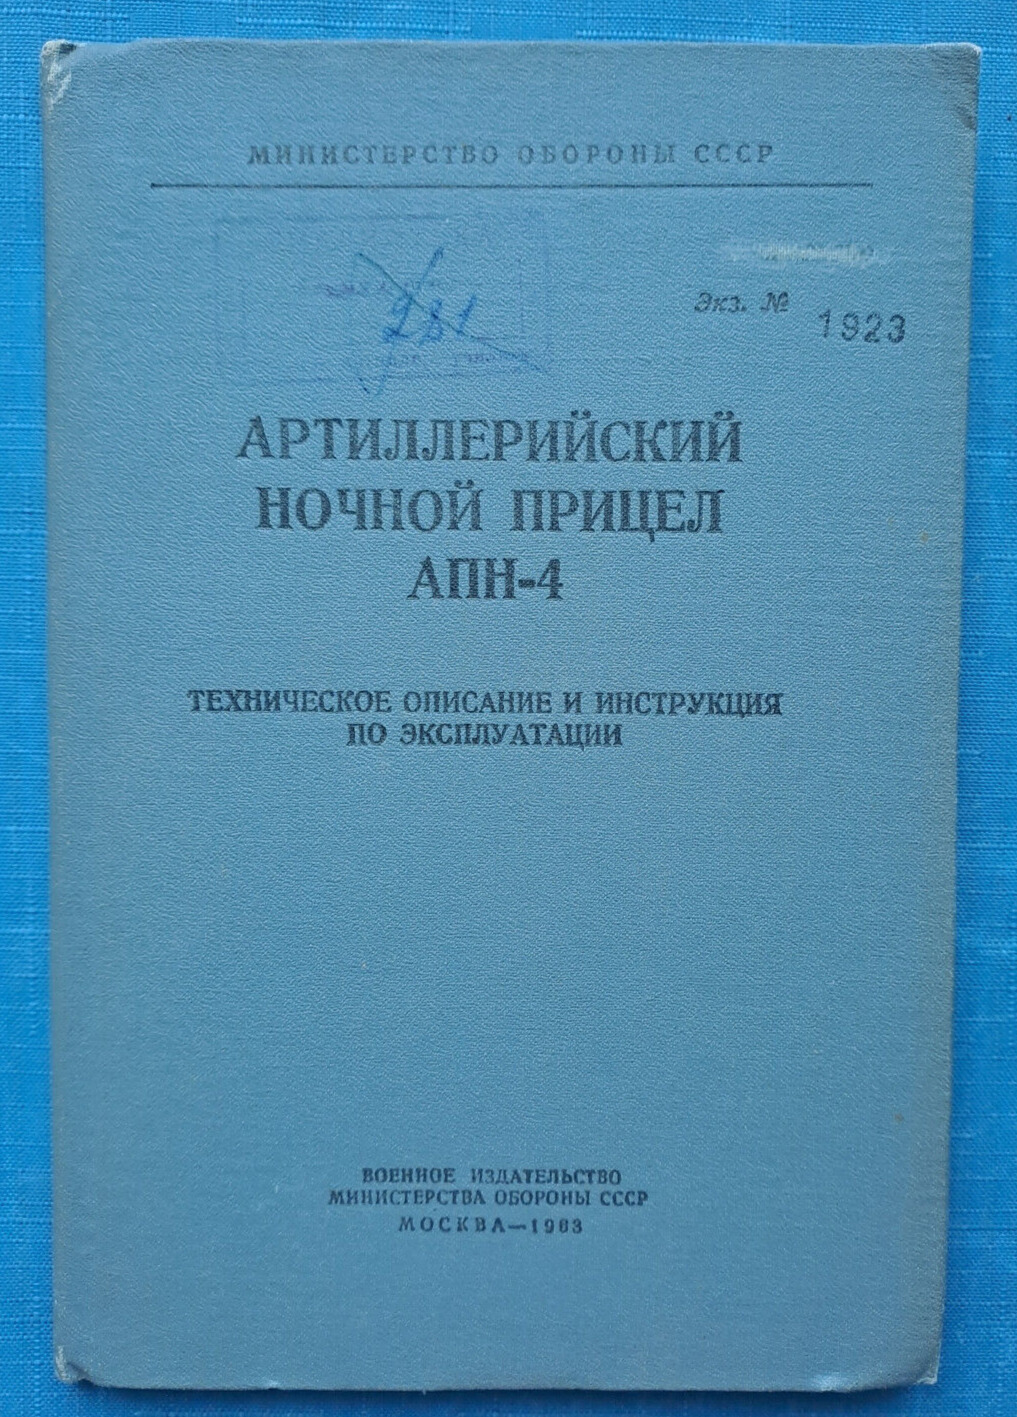 1963 Artillery night sight APN-4 Optics Military Soviet Army Manual Russian book